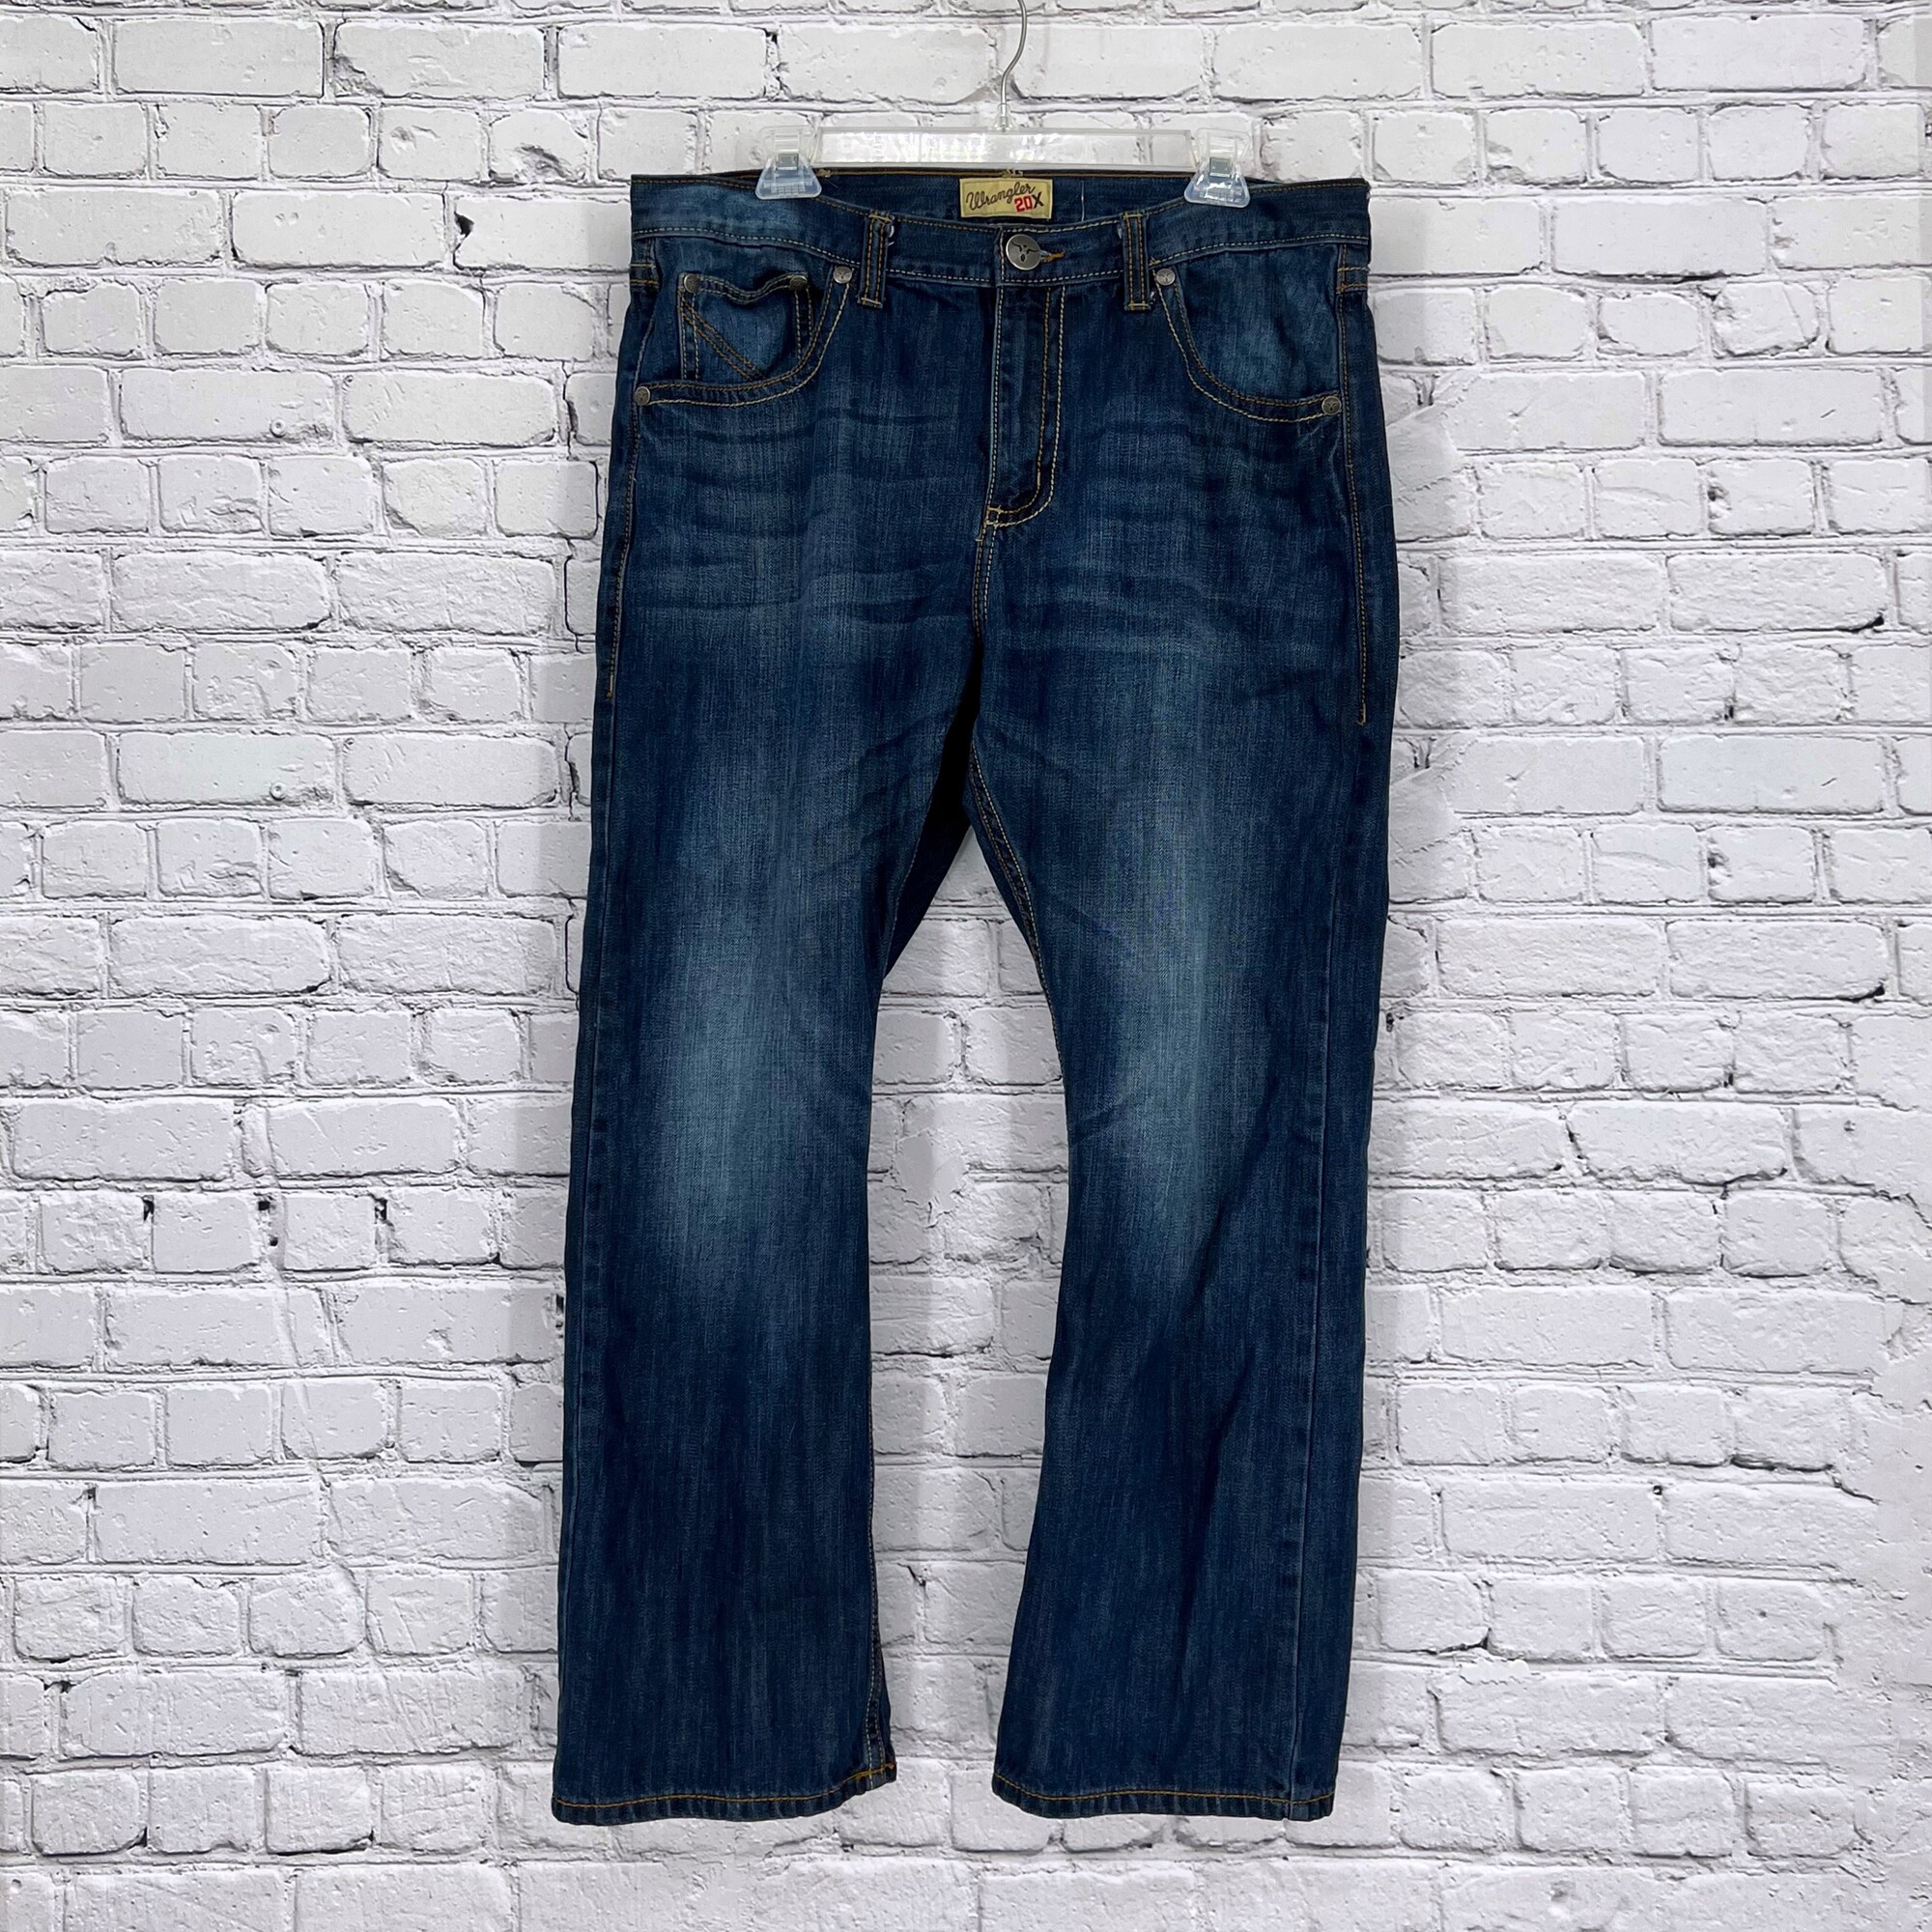 Wrangler Jeans | Once 'n Again in Fairbury, IL